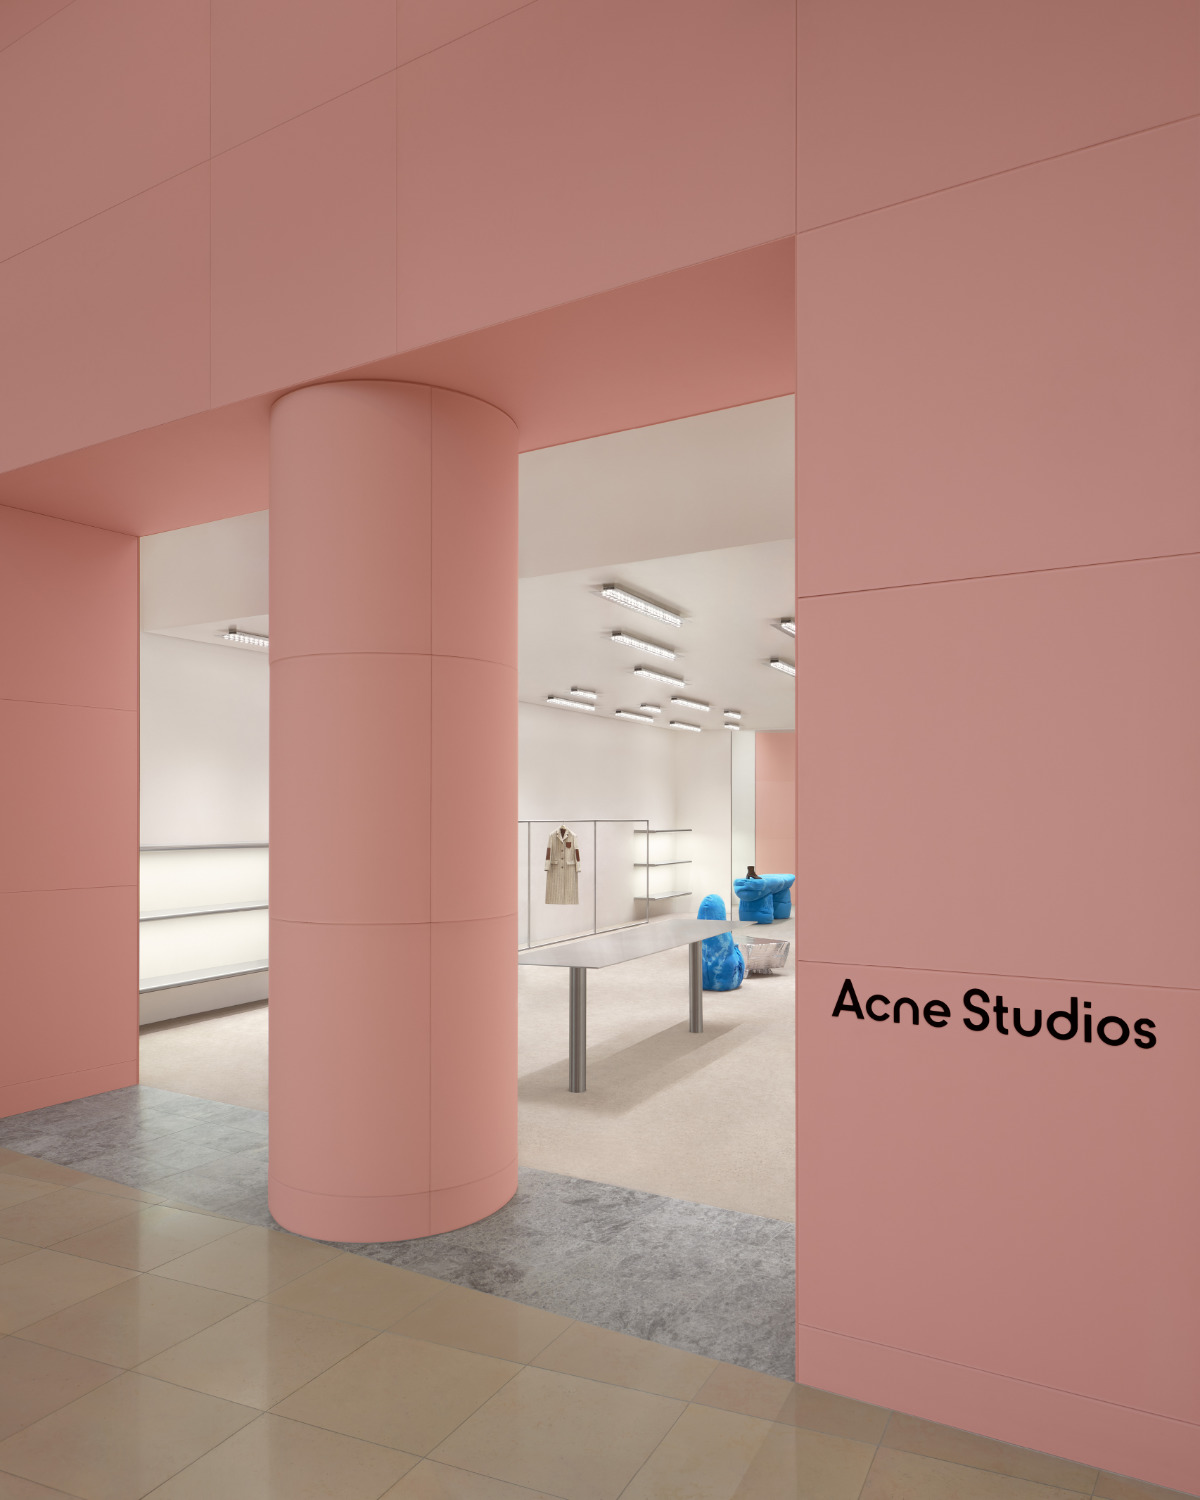 Acne Studios Opened Its New Store In Melbourne, Australia